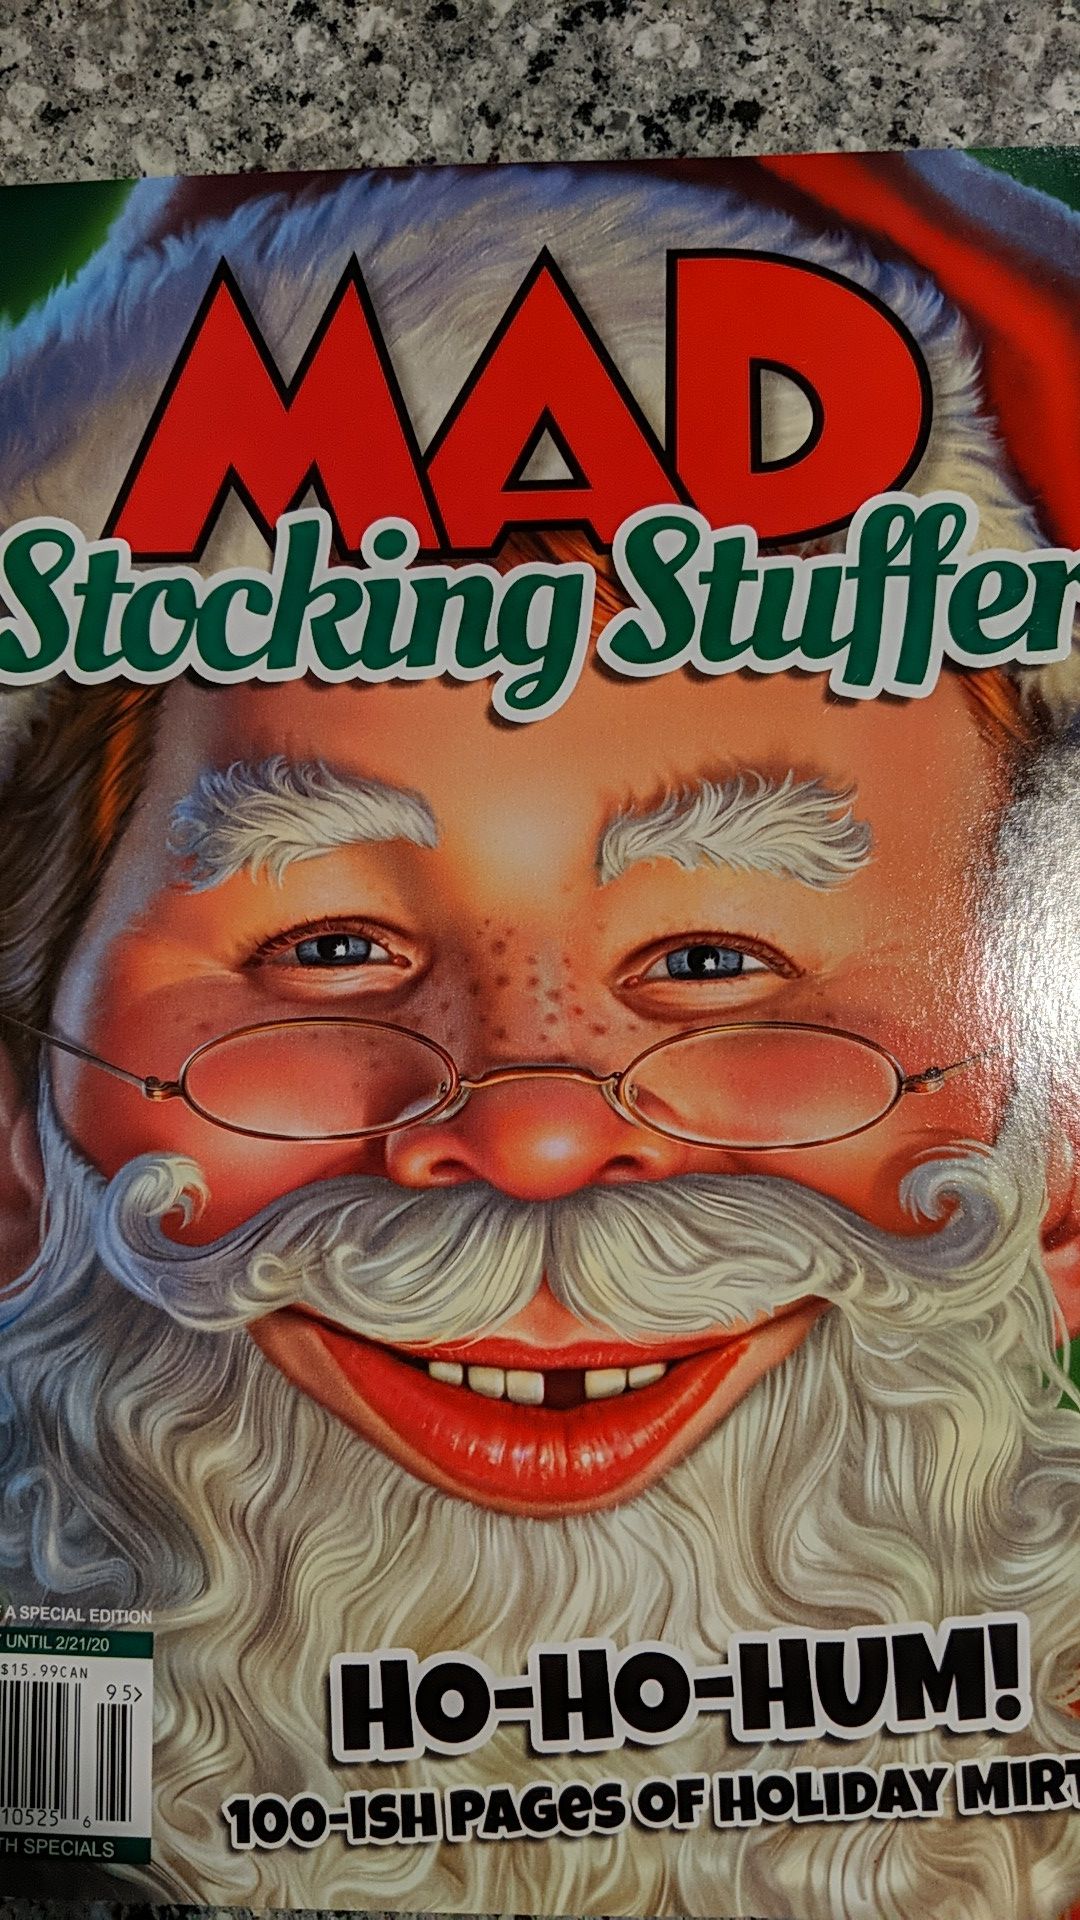 MAD Magazine Stocking Stuffer issue